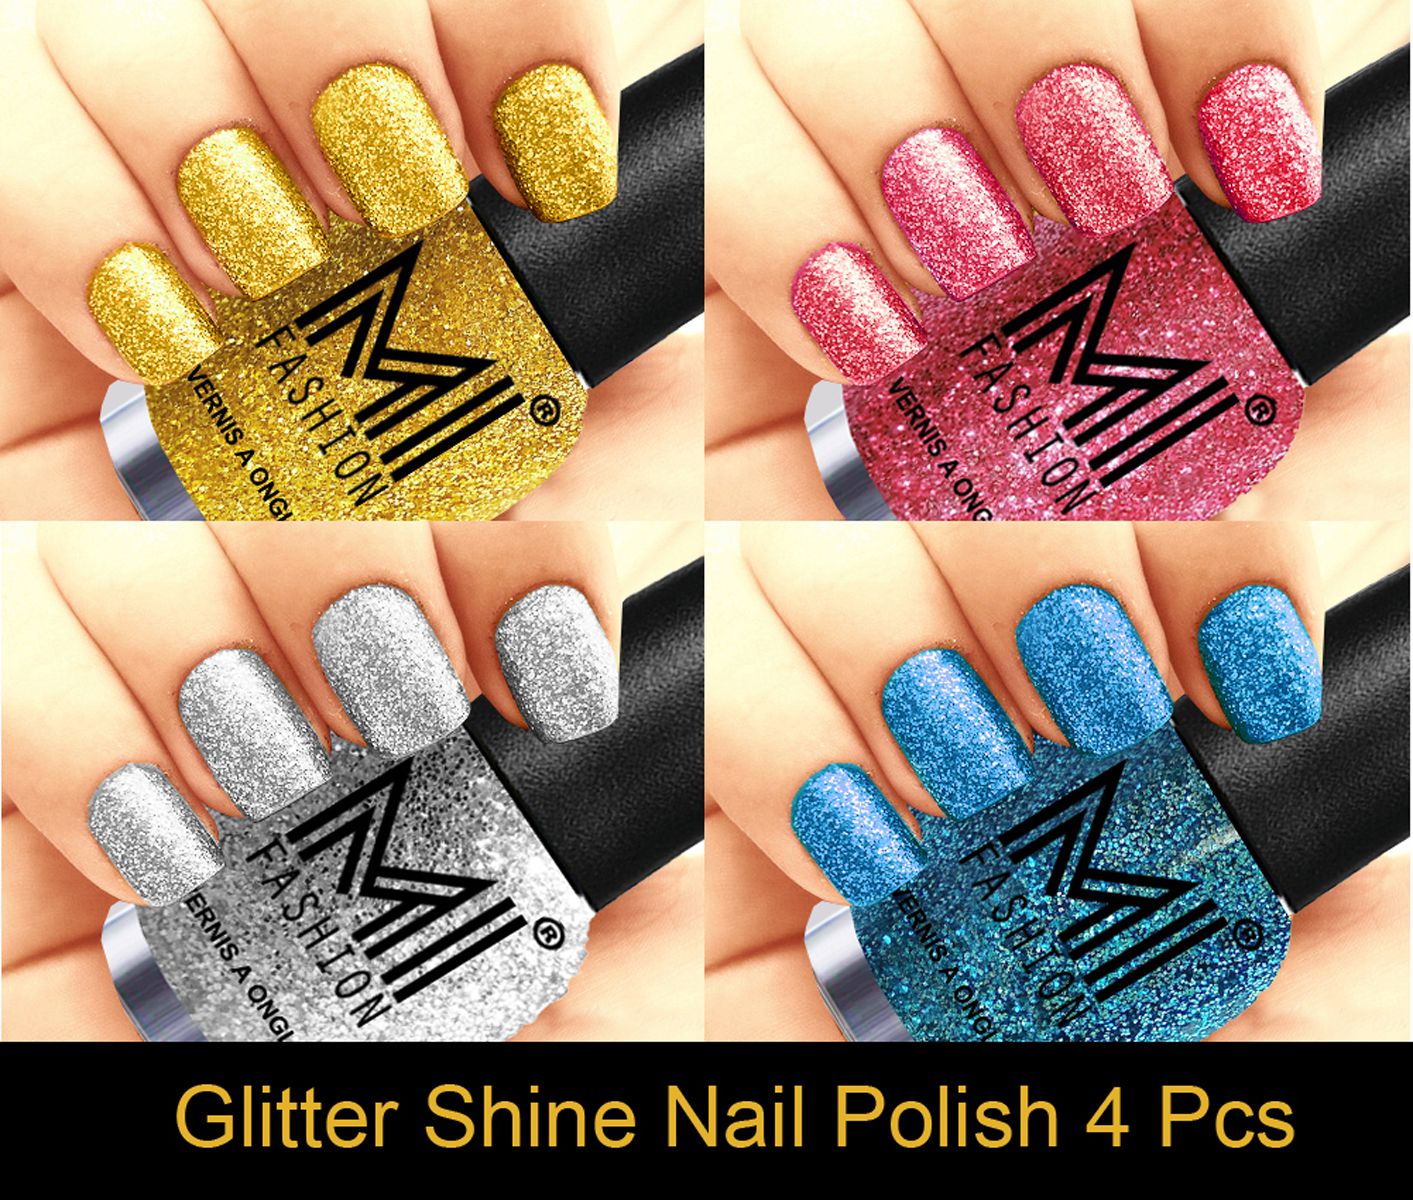     			MI FASHION Long Lasting Professional Glitter Nail Polish Golden Gold,Pink,Silver,Sky Blue Glitter Pack of 4 mL